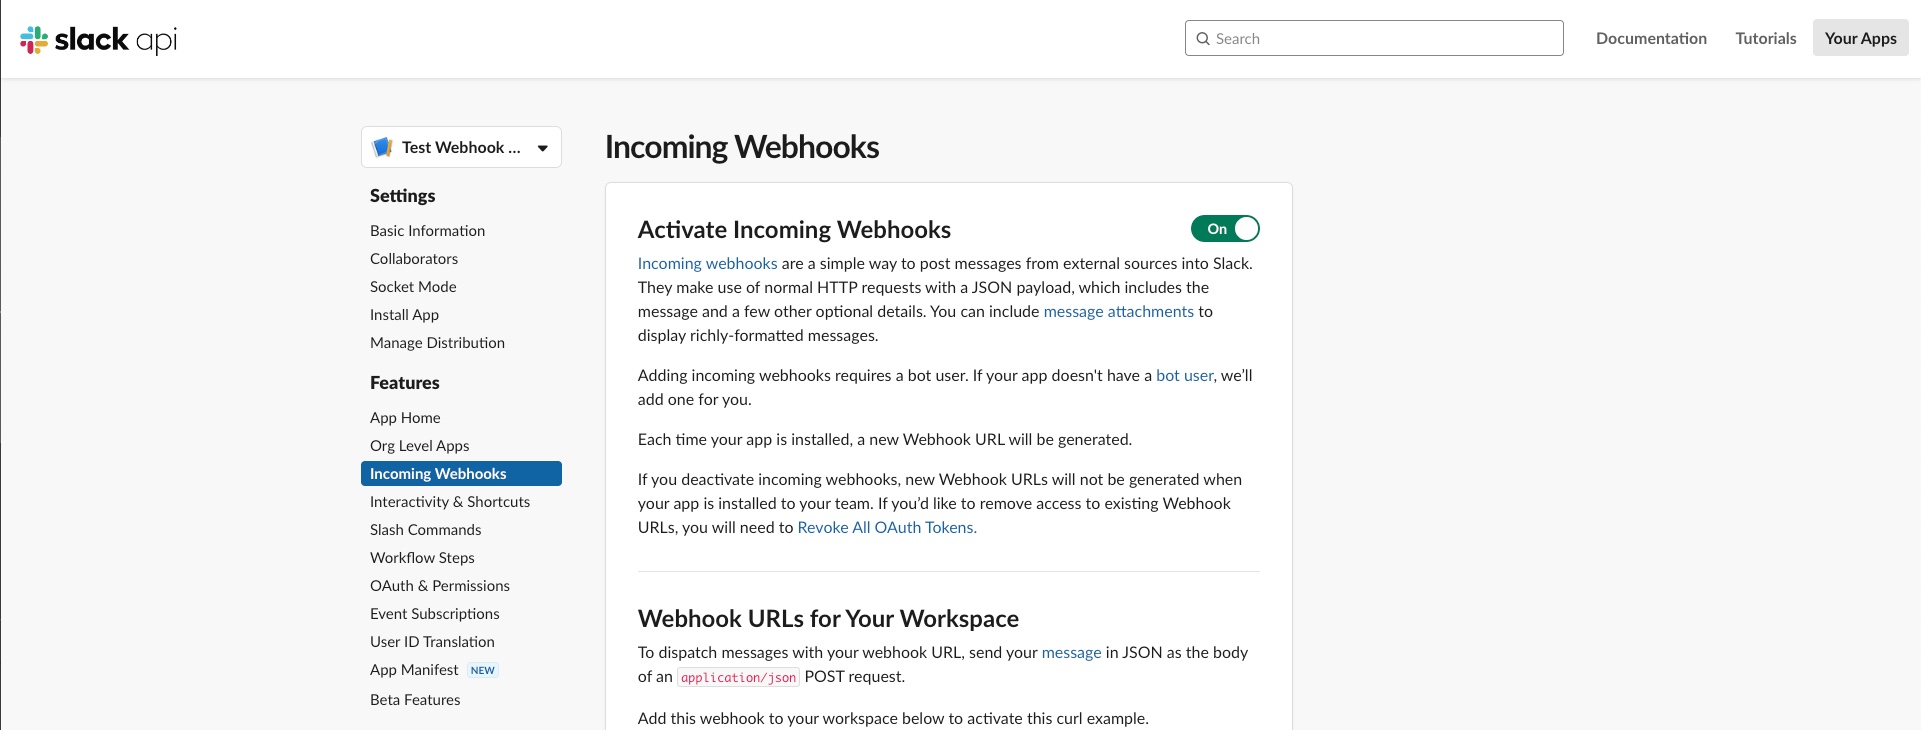 Slack API showing the Add New Webhook to Workspace option